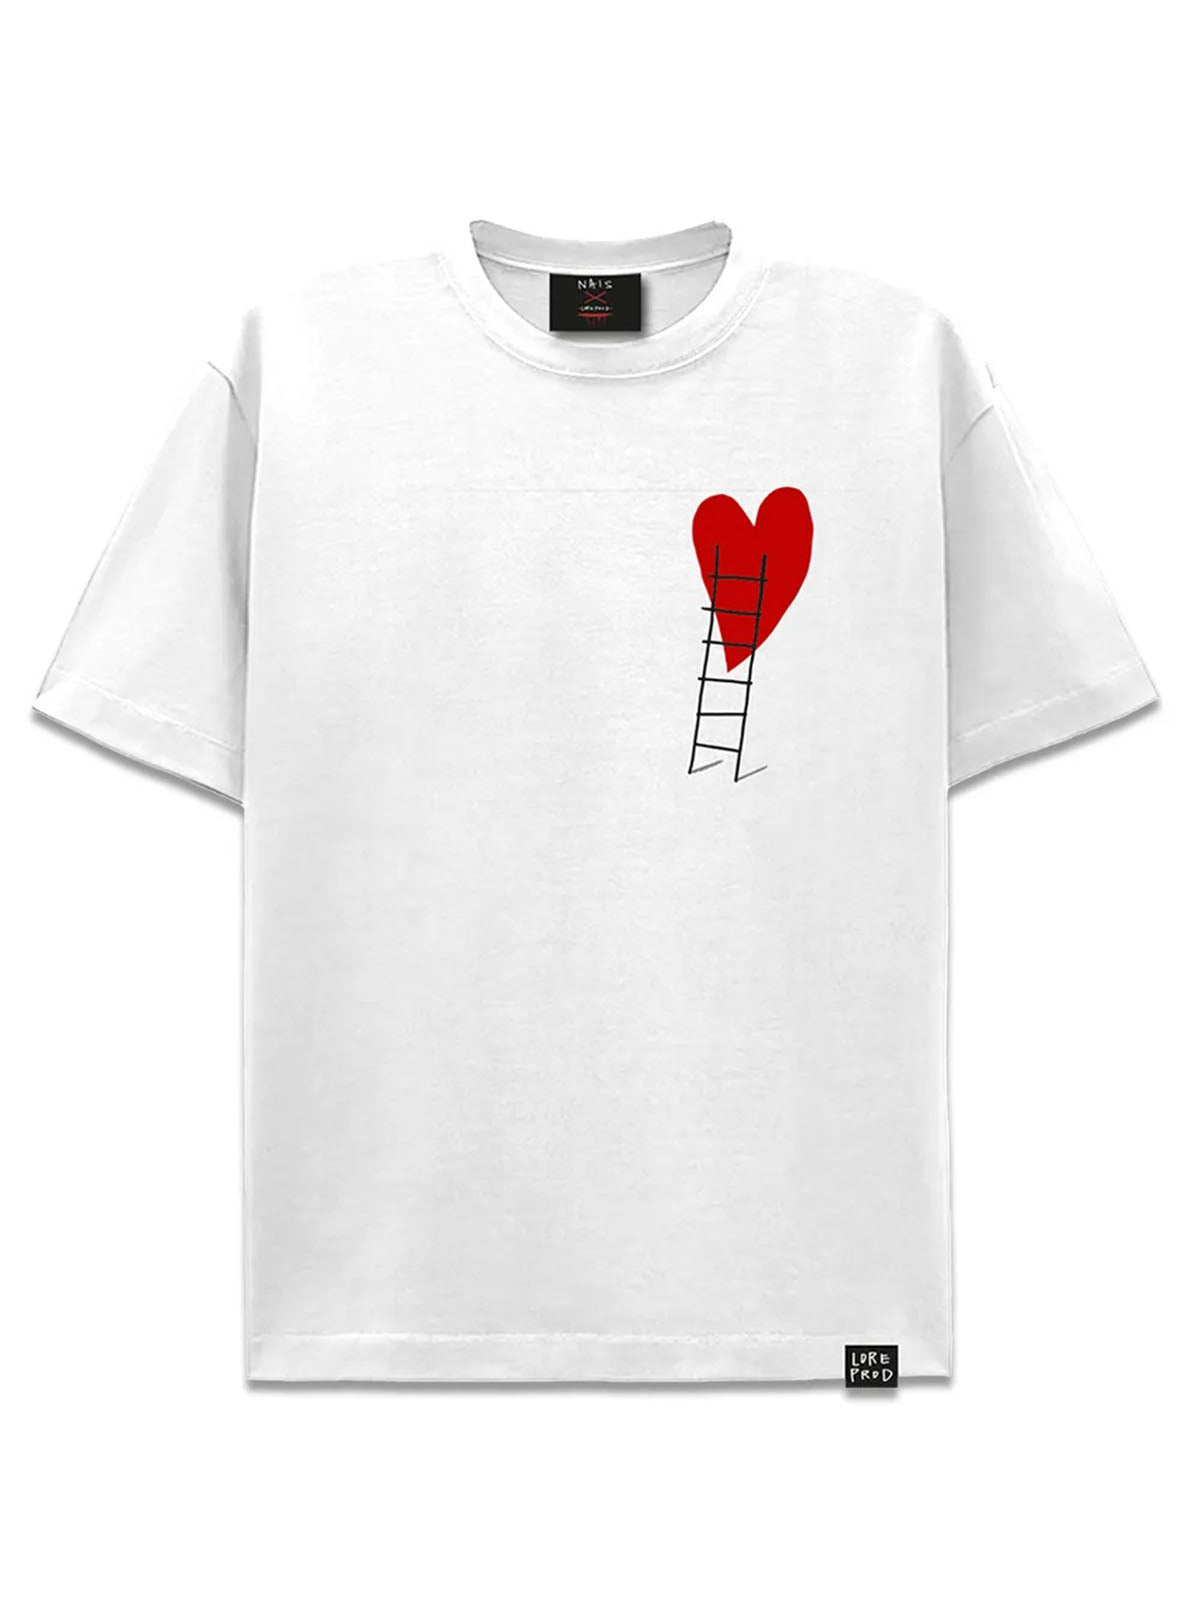 Nais Men's T-Shirt - Heart Lore Prod X Nais Tee - White